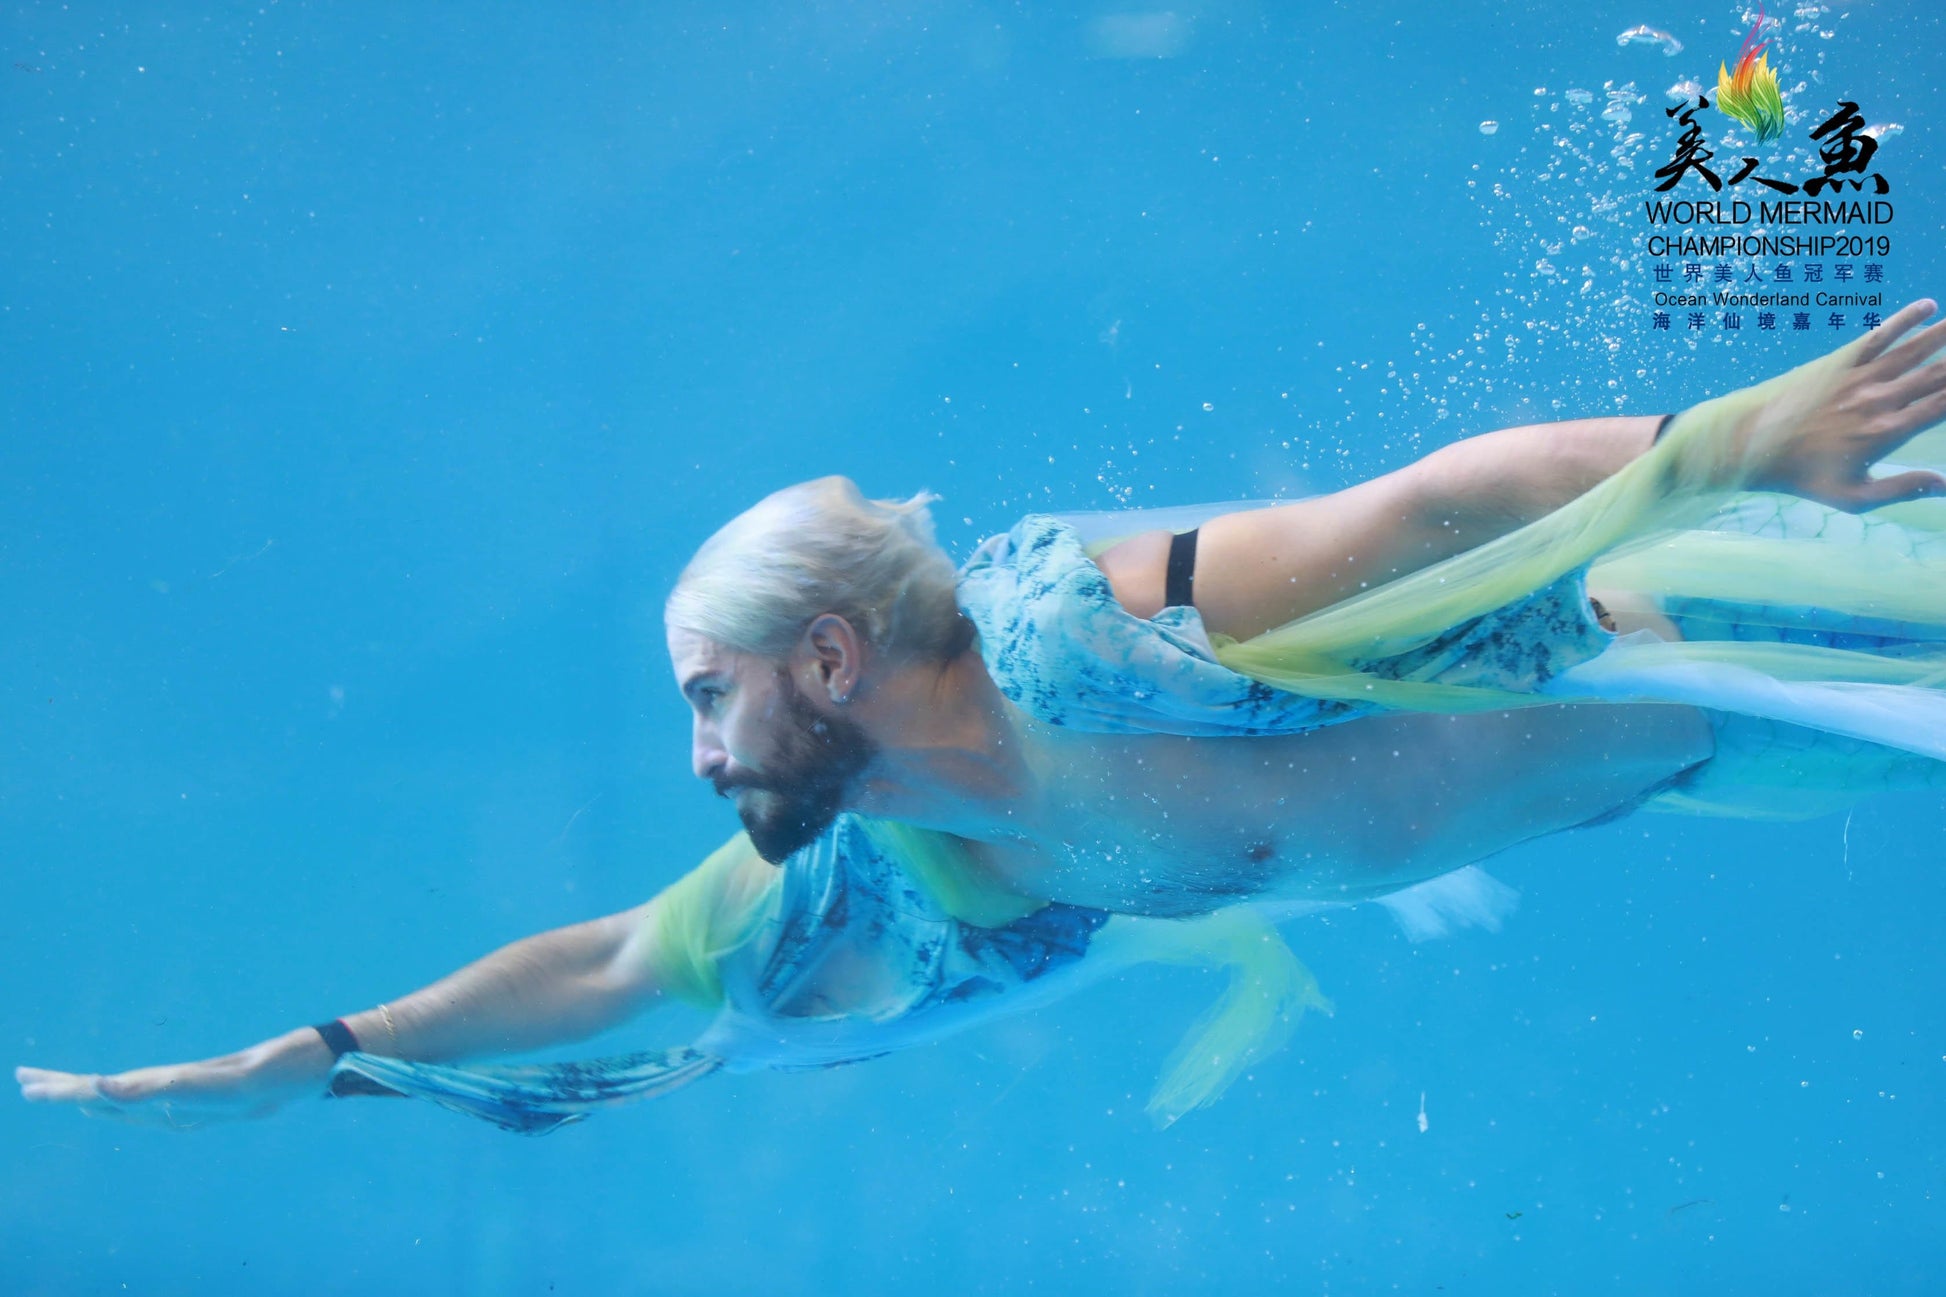 merman performer at World Mermaid Championship